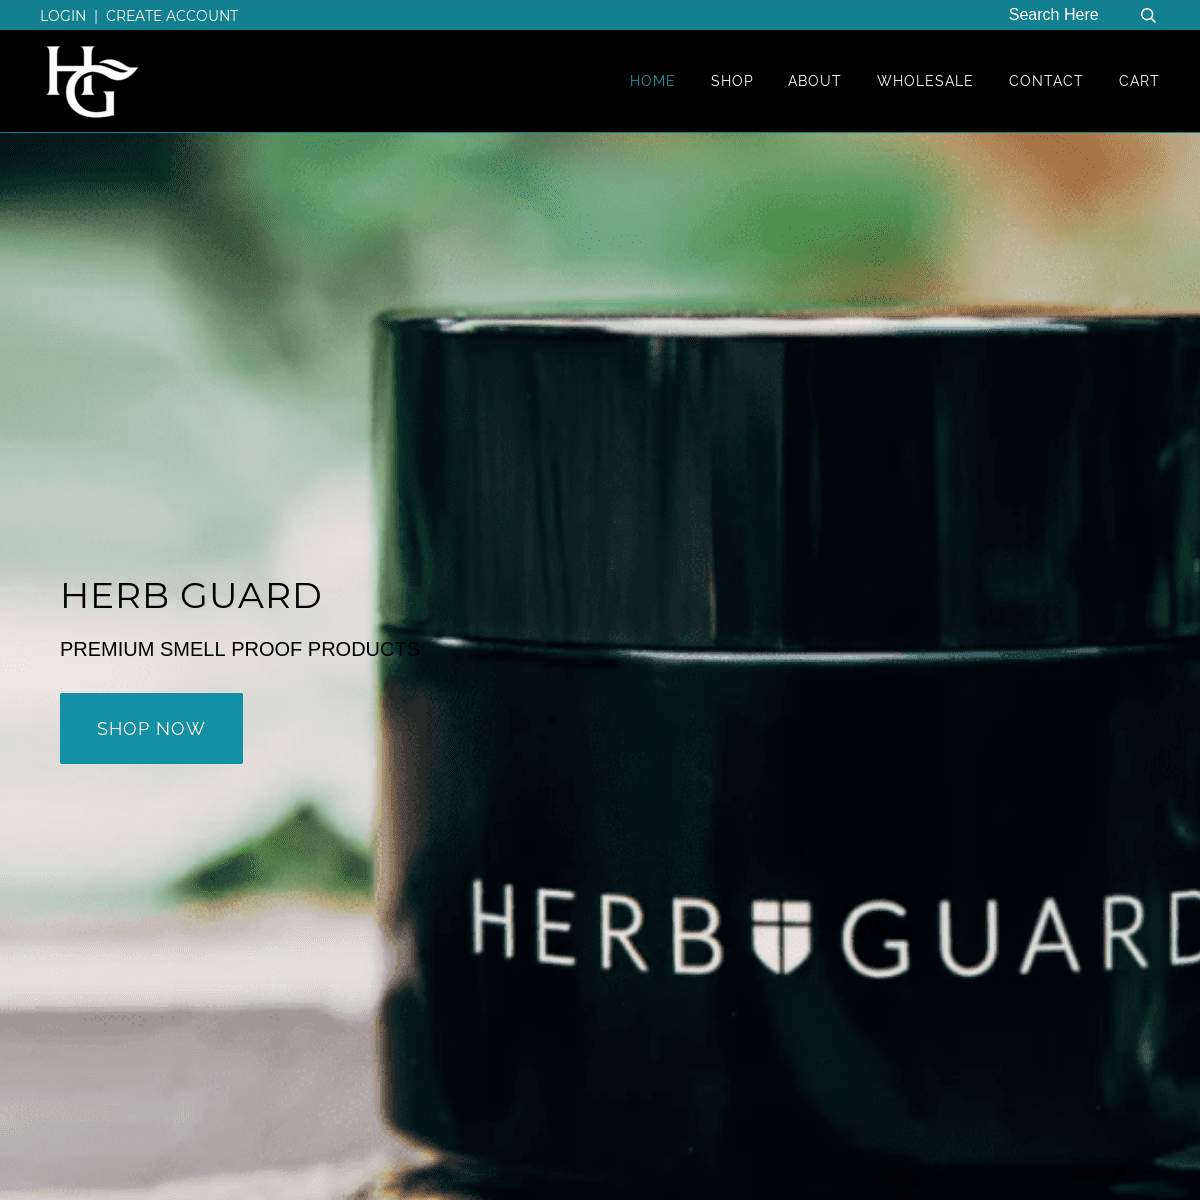 A complete backup of herbguard.com